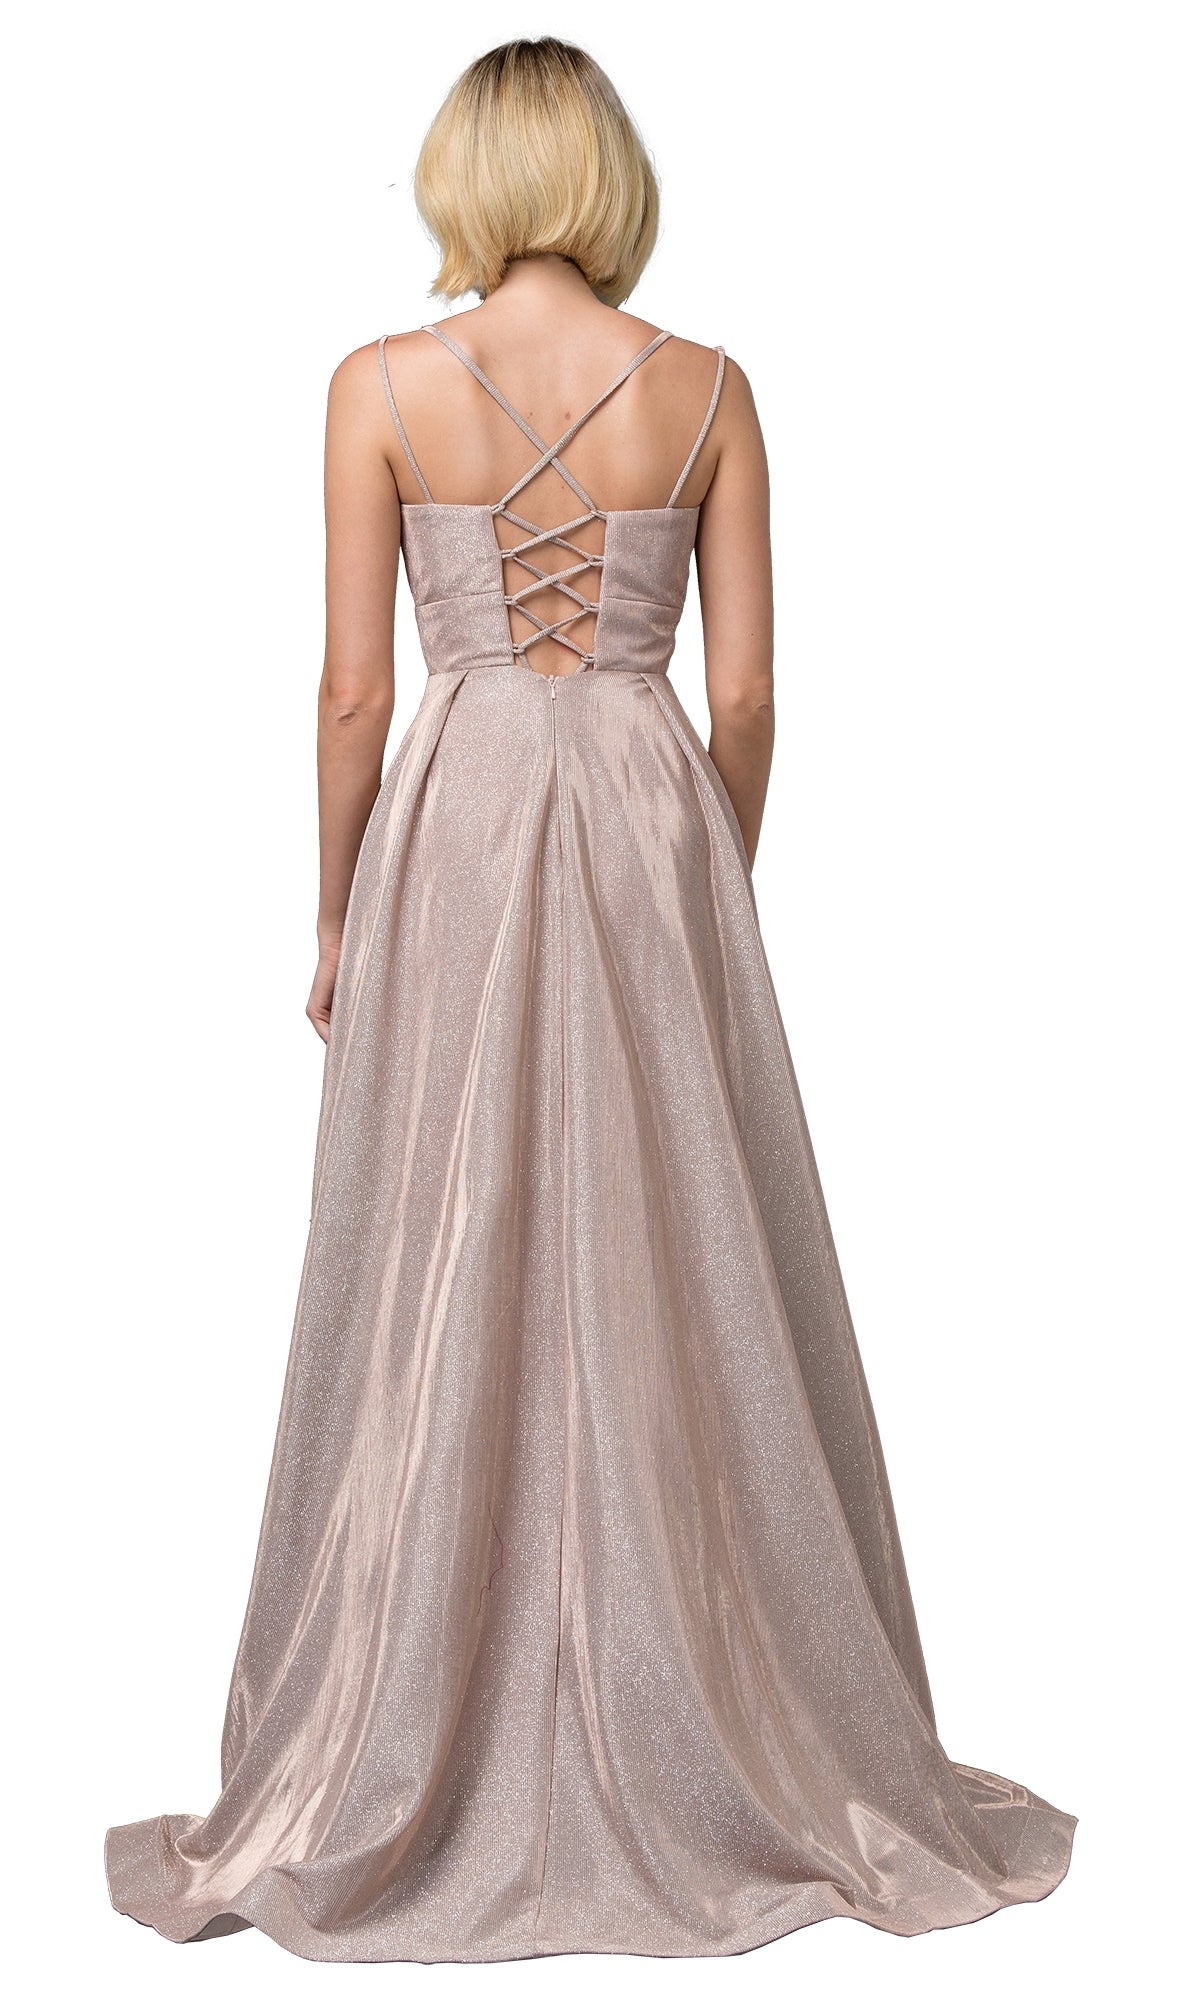 Long Prom Dress 2611 by Dancing Queen